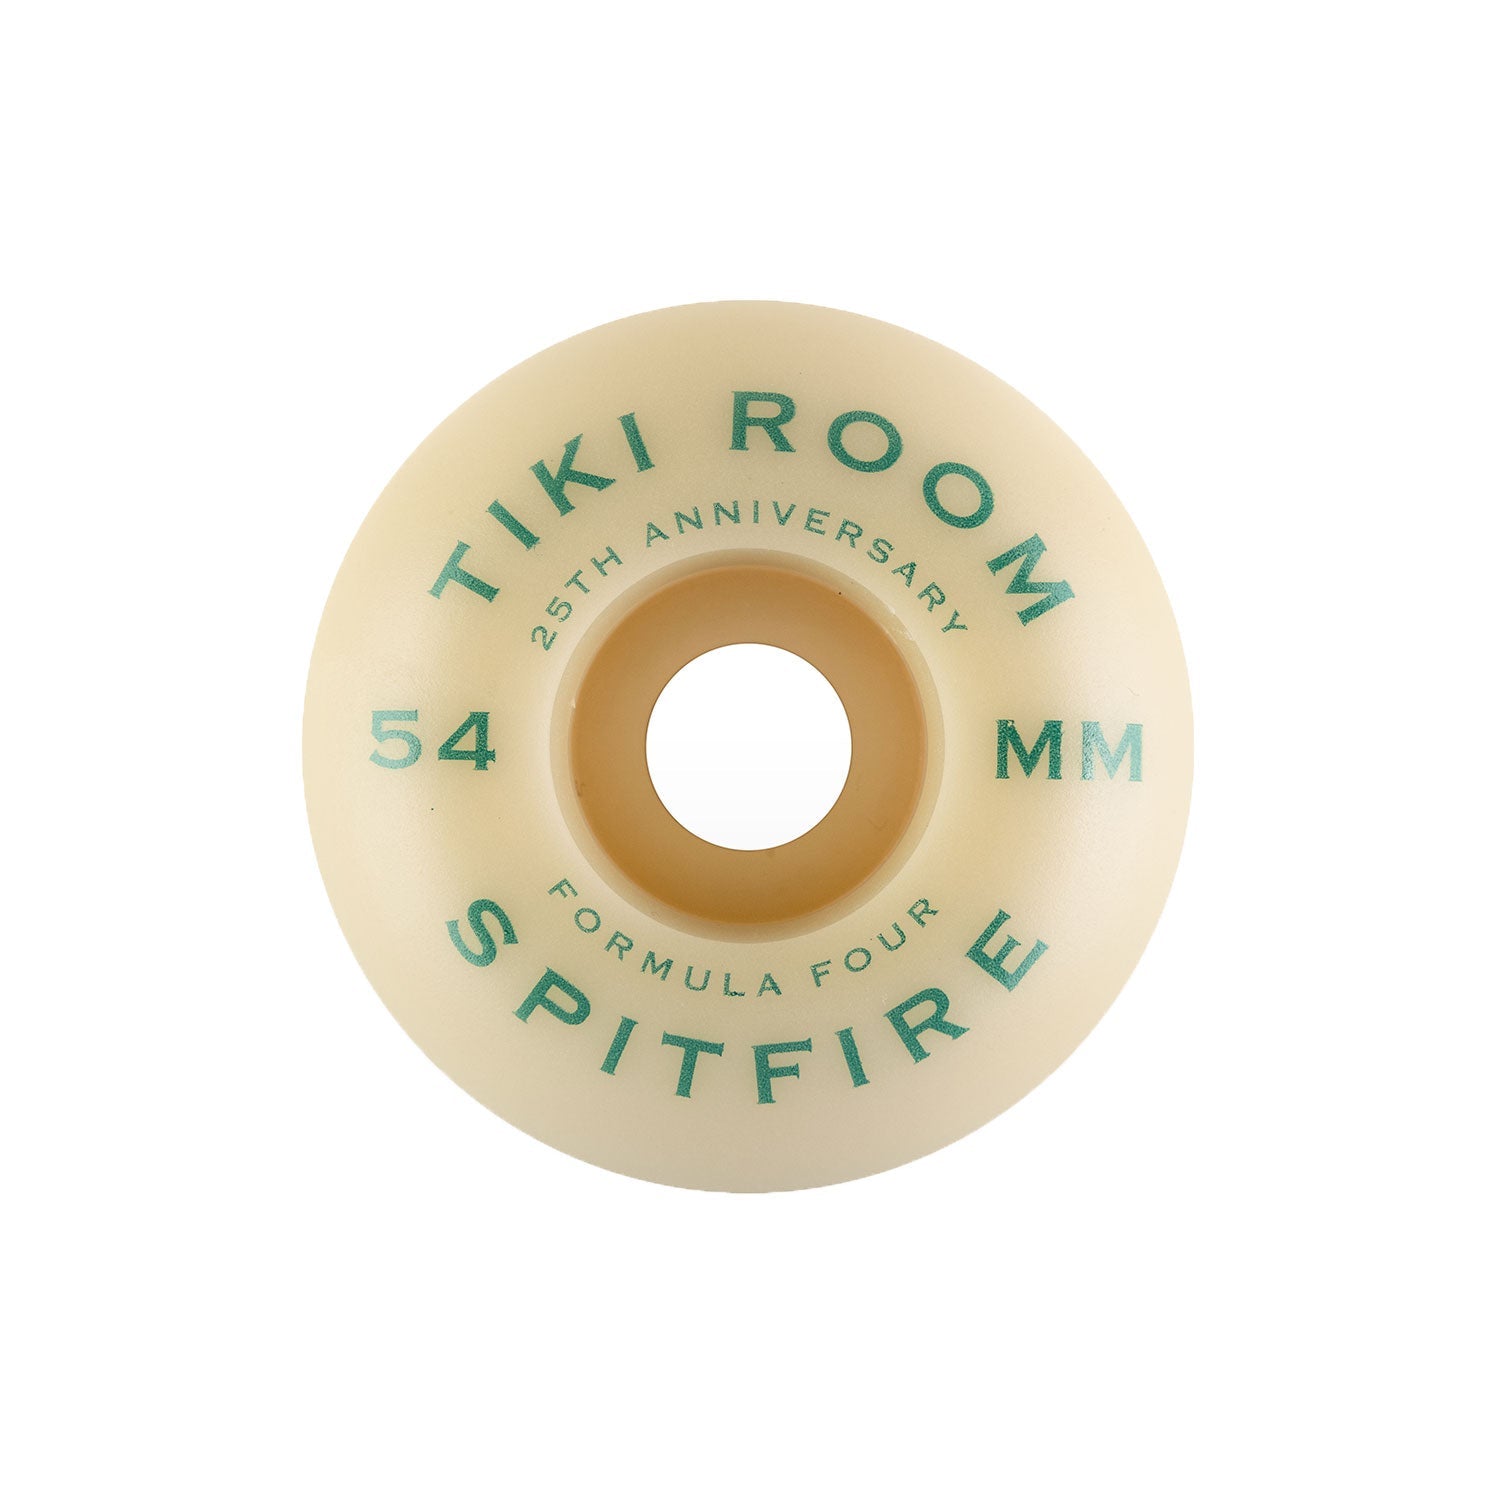 Spitfire Formula Four 99 Tiki Room 25th Anniversary classic wheel (54mm) - Tiki Room Skateboards - 2